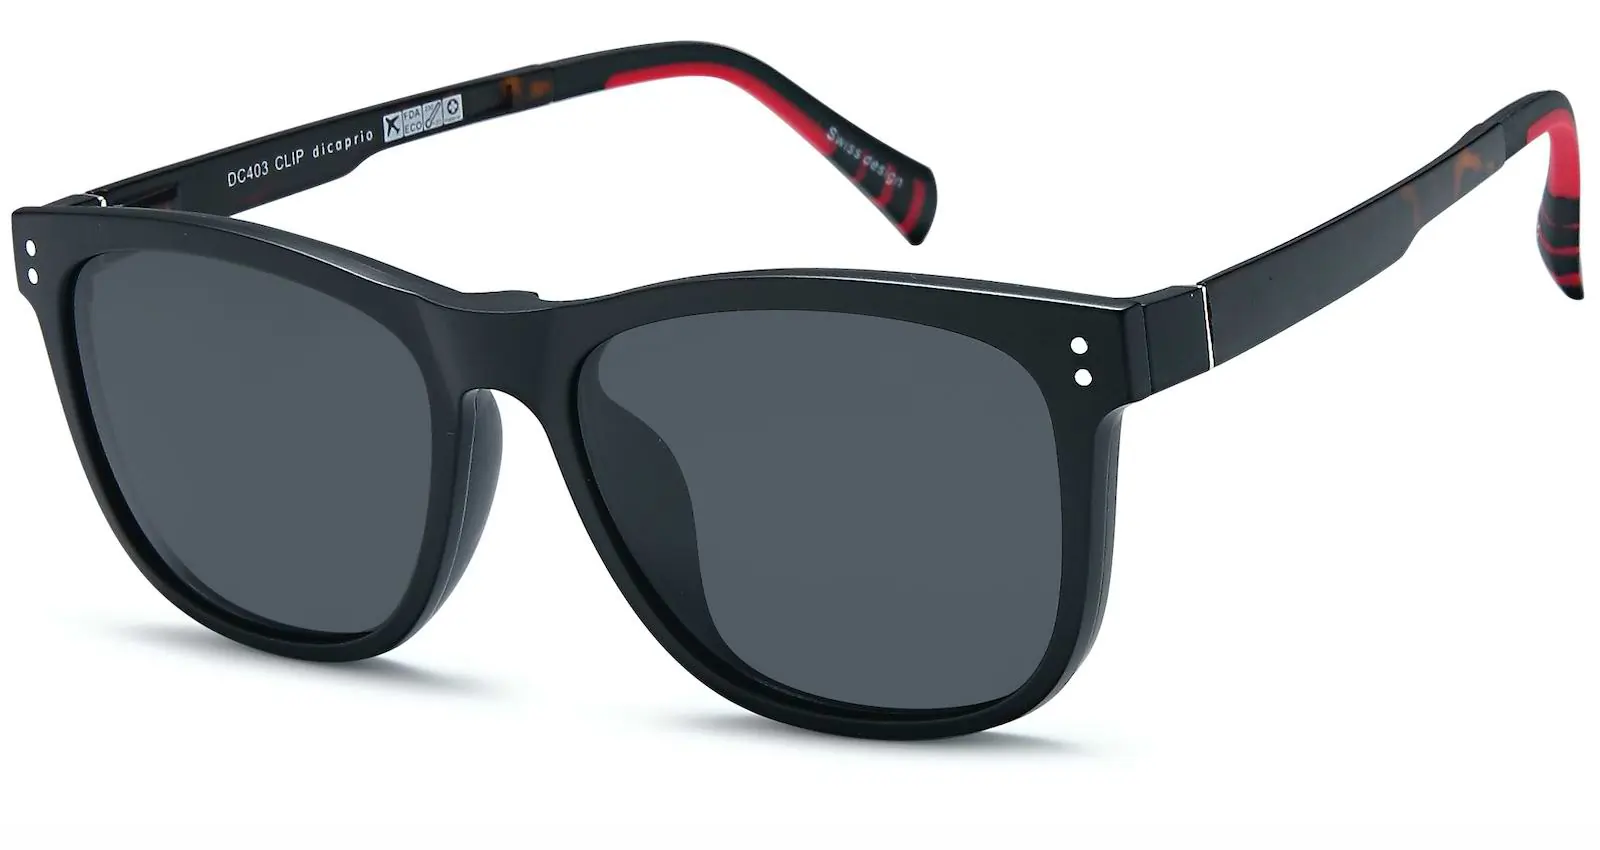 Capri DC403 Di Caprio Glasses Frame | BestNewGlasses.com